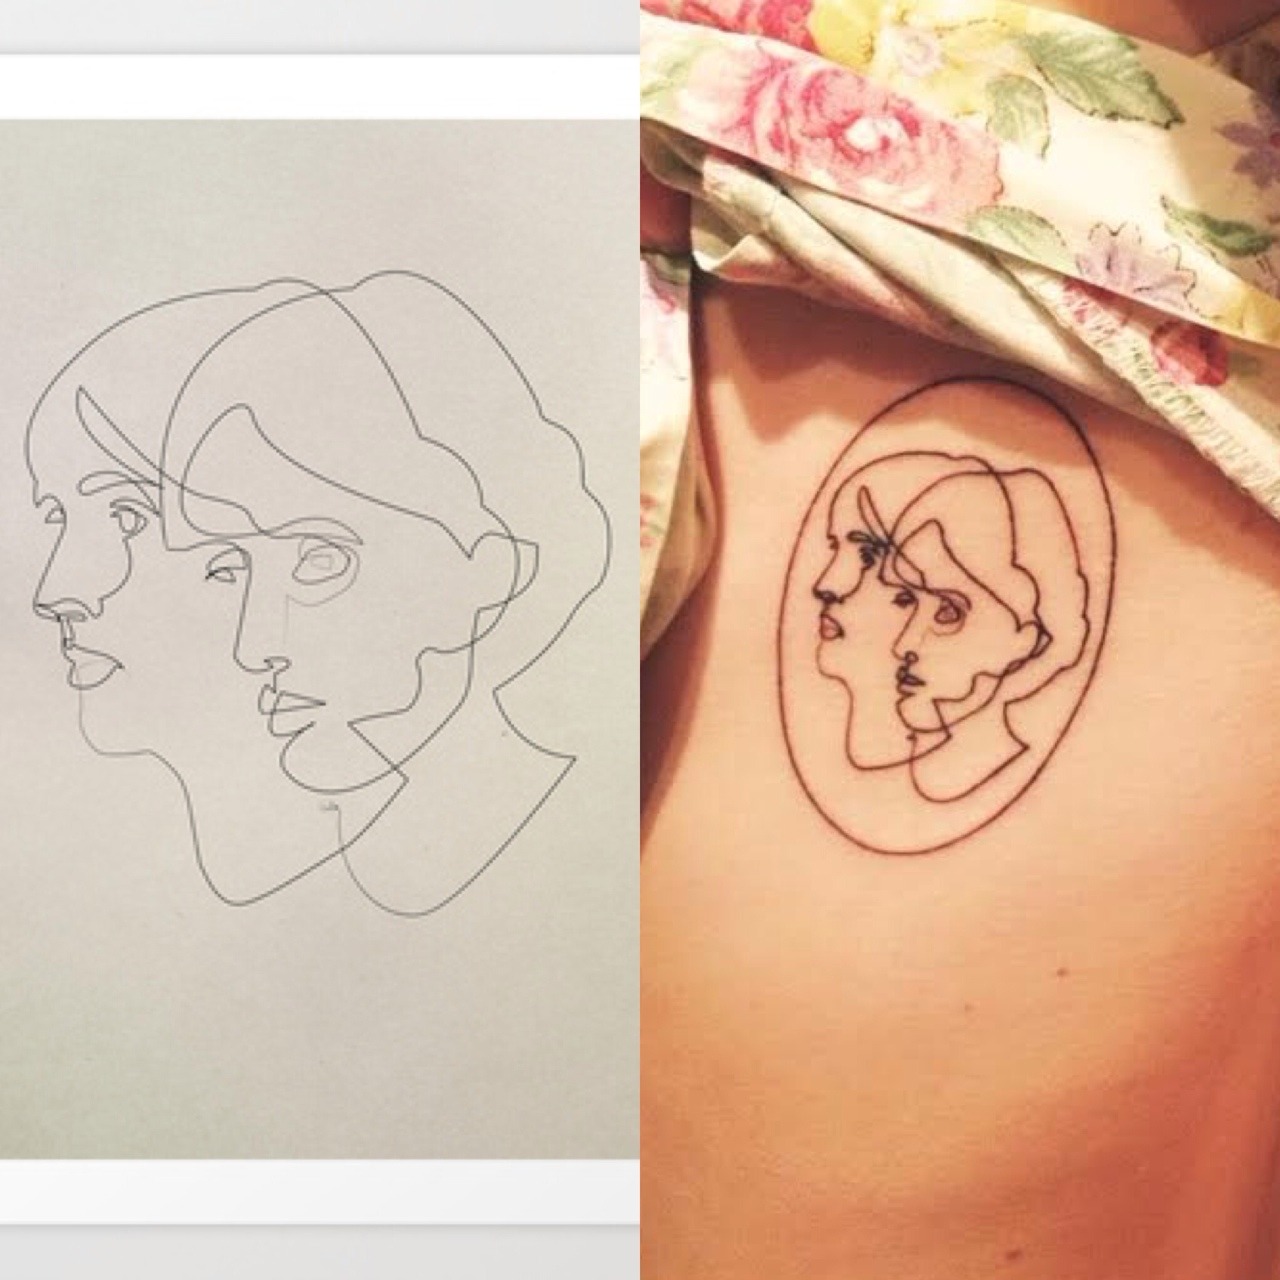  (Virginia Woolf as a tattoo. Beautiful ink work....)